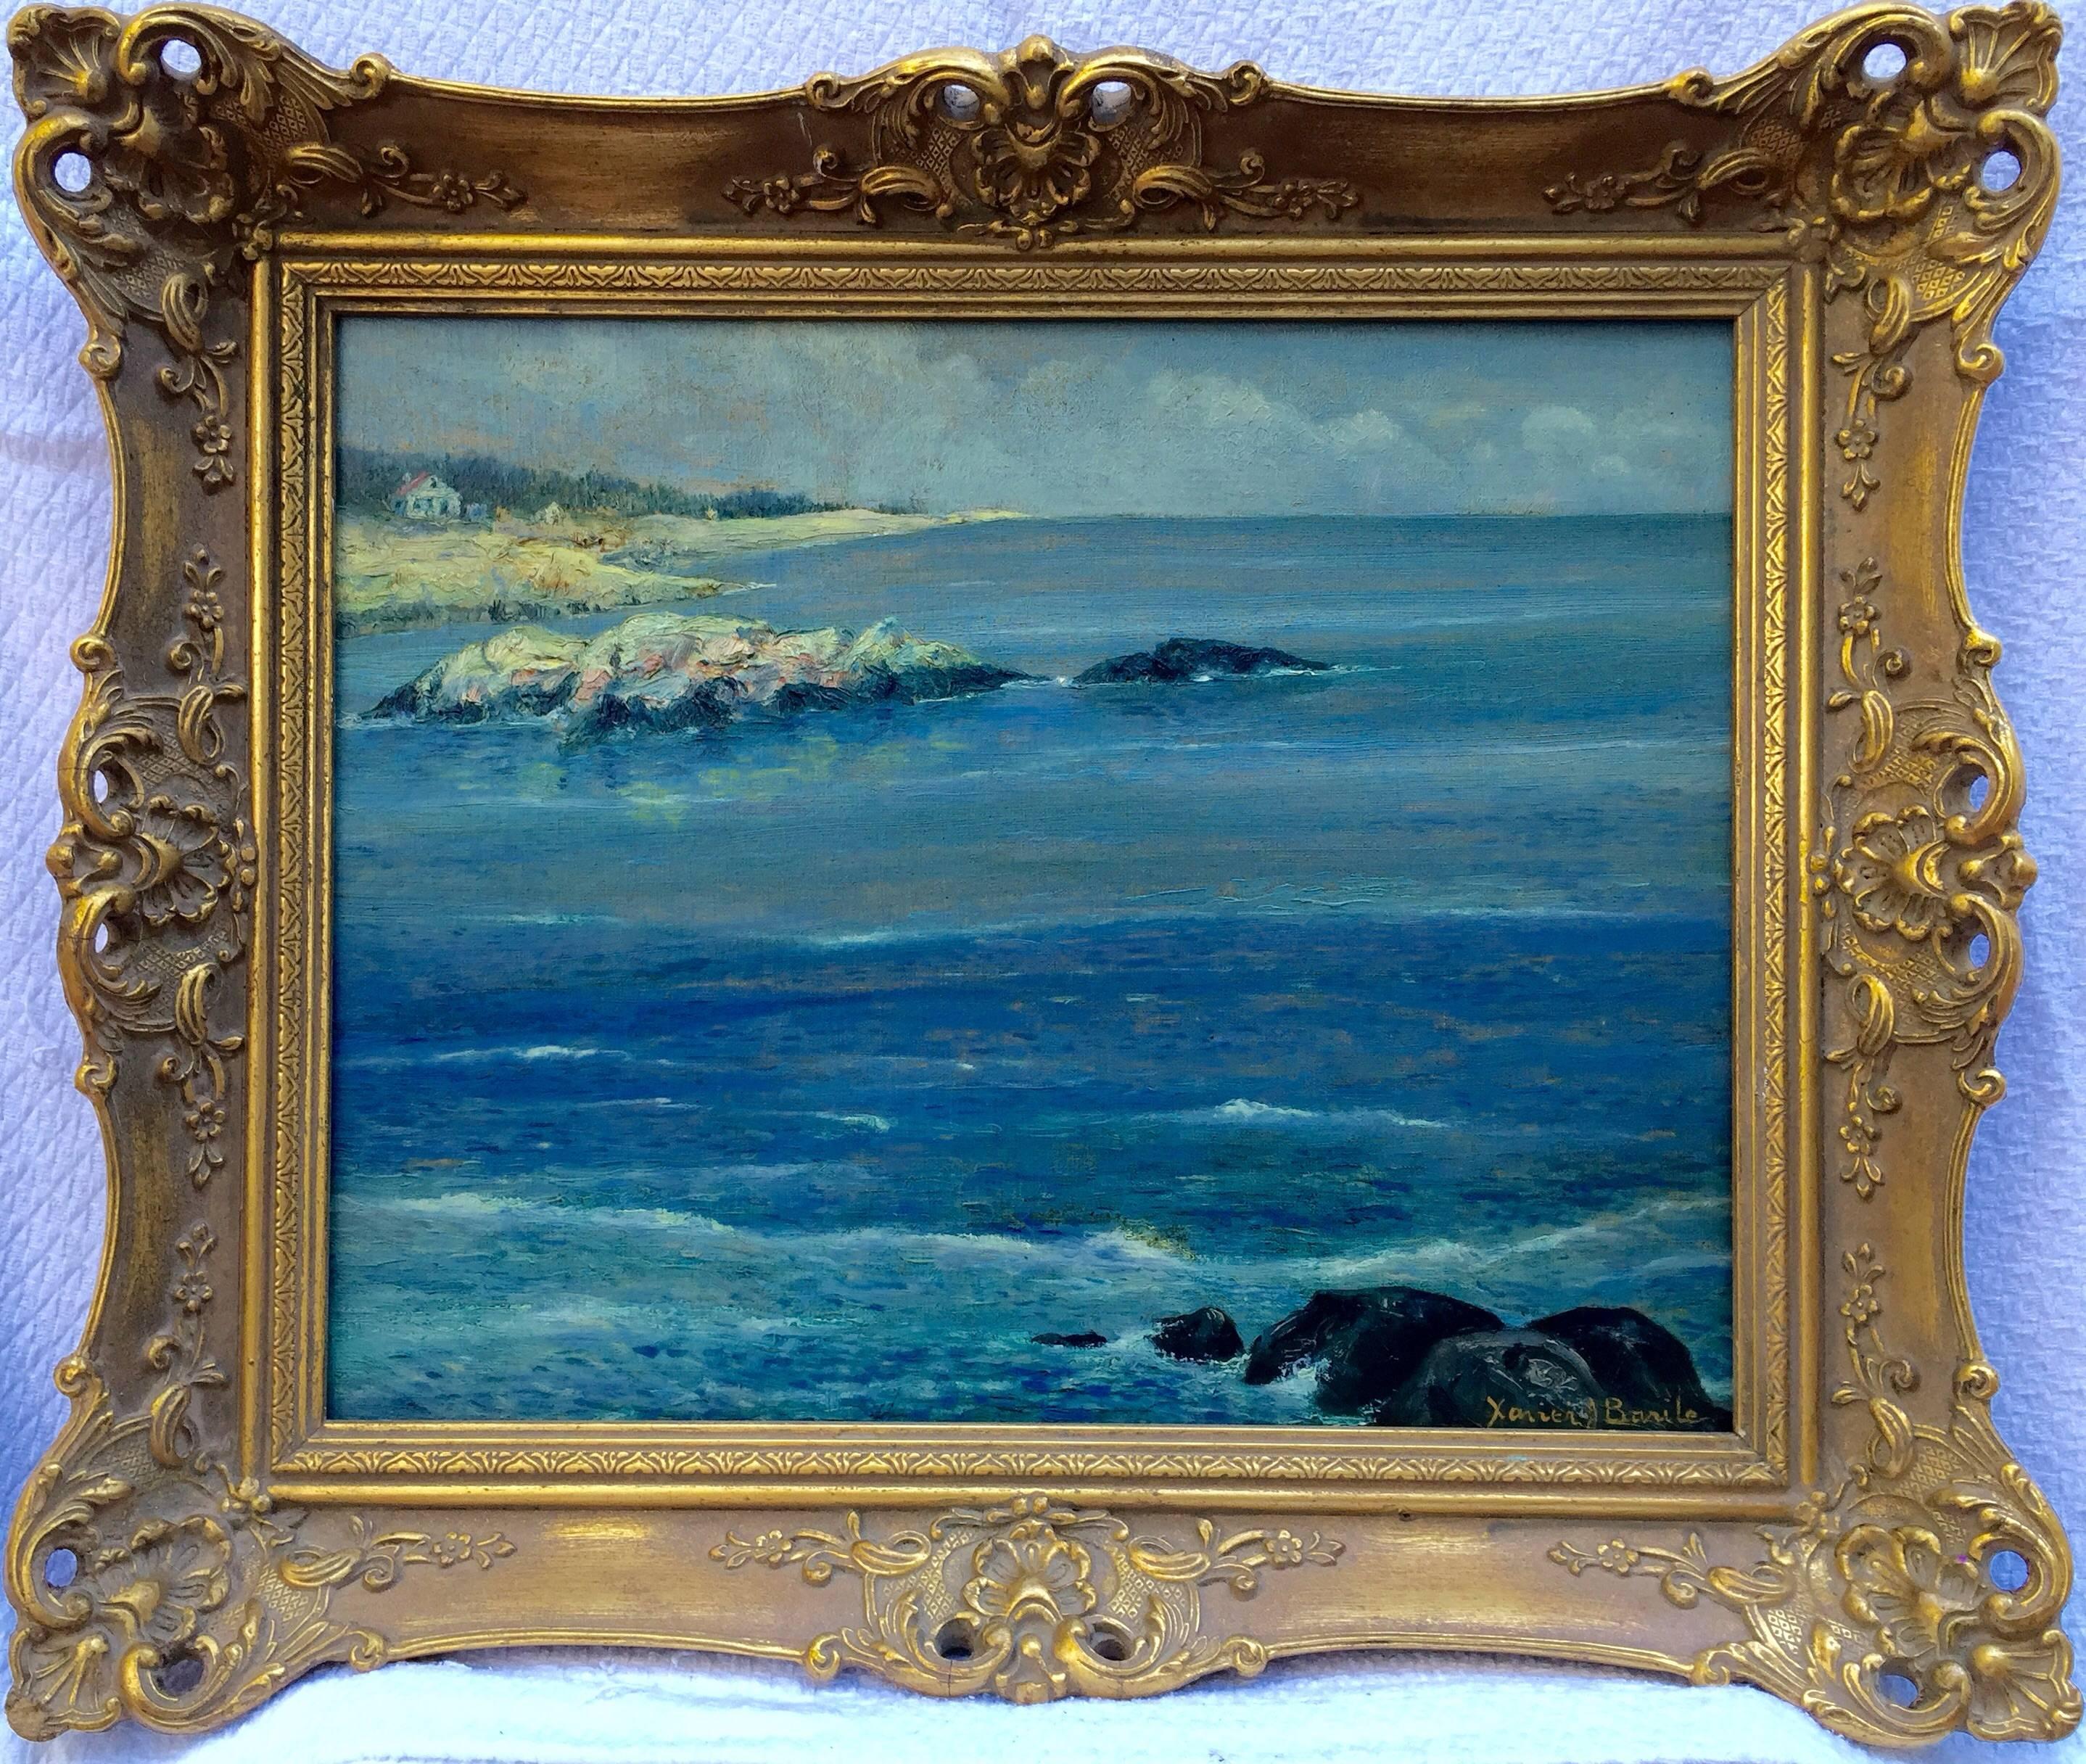 Xavier J. Barile Landscape Painting - "North Atlantic"